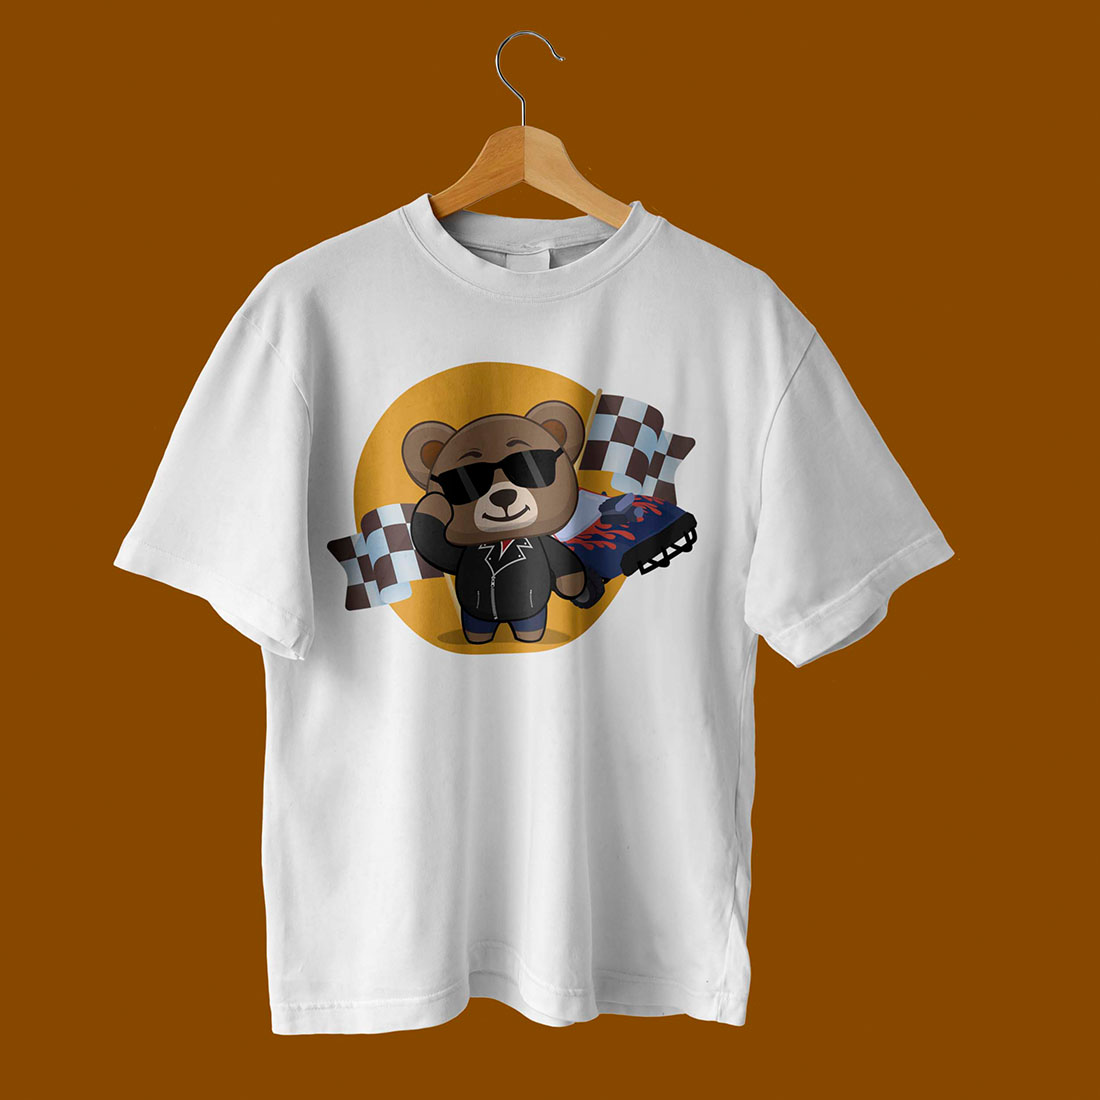 Bear with Sunglasses T-shirt Design | MasterBundles